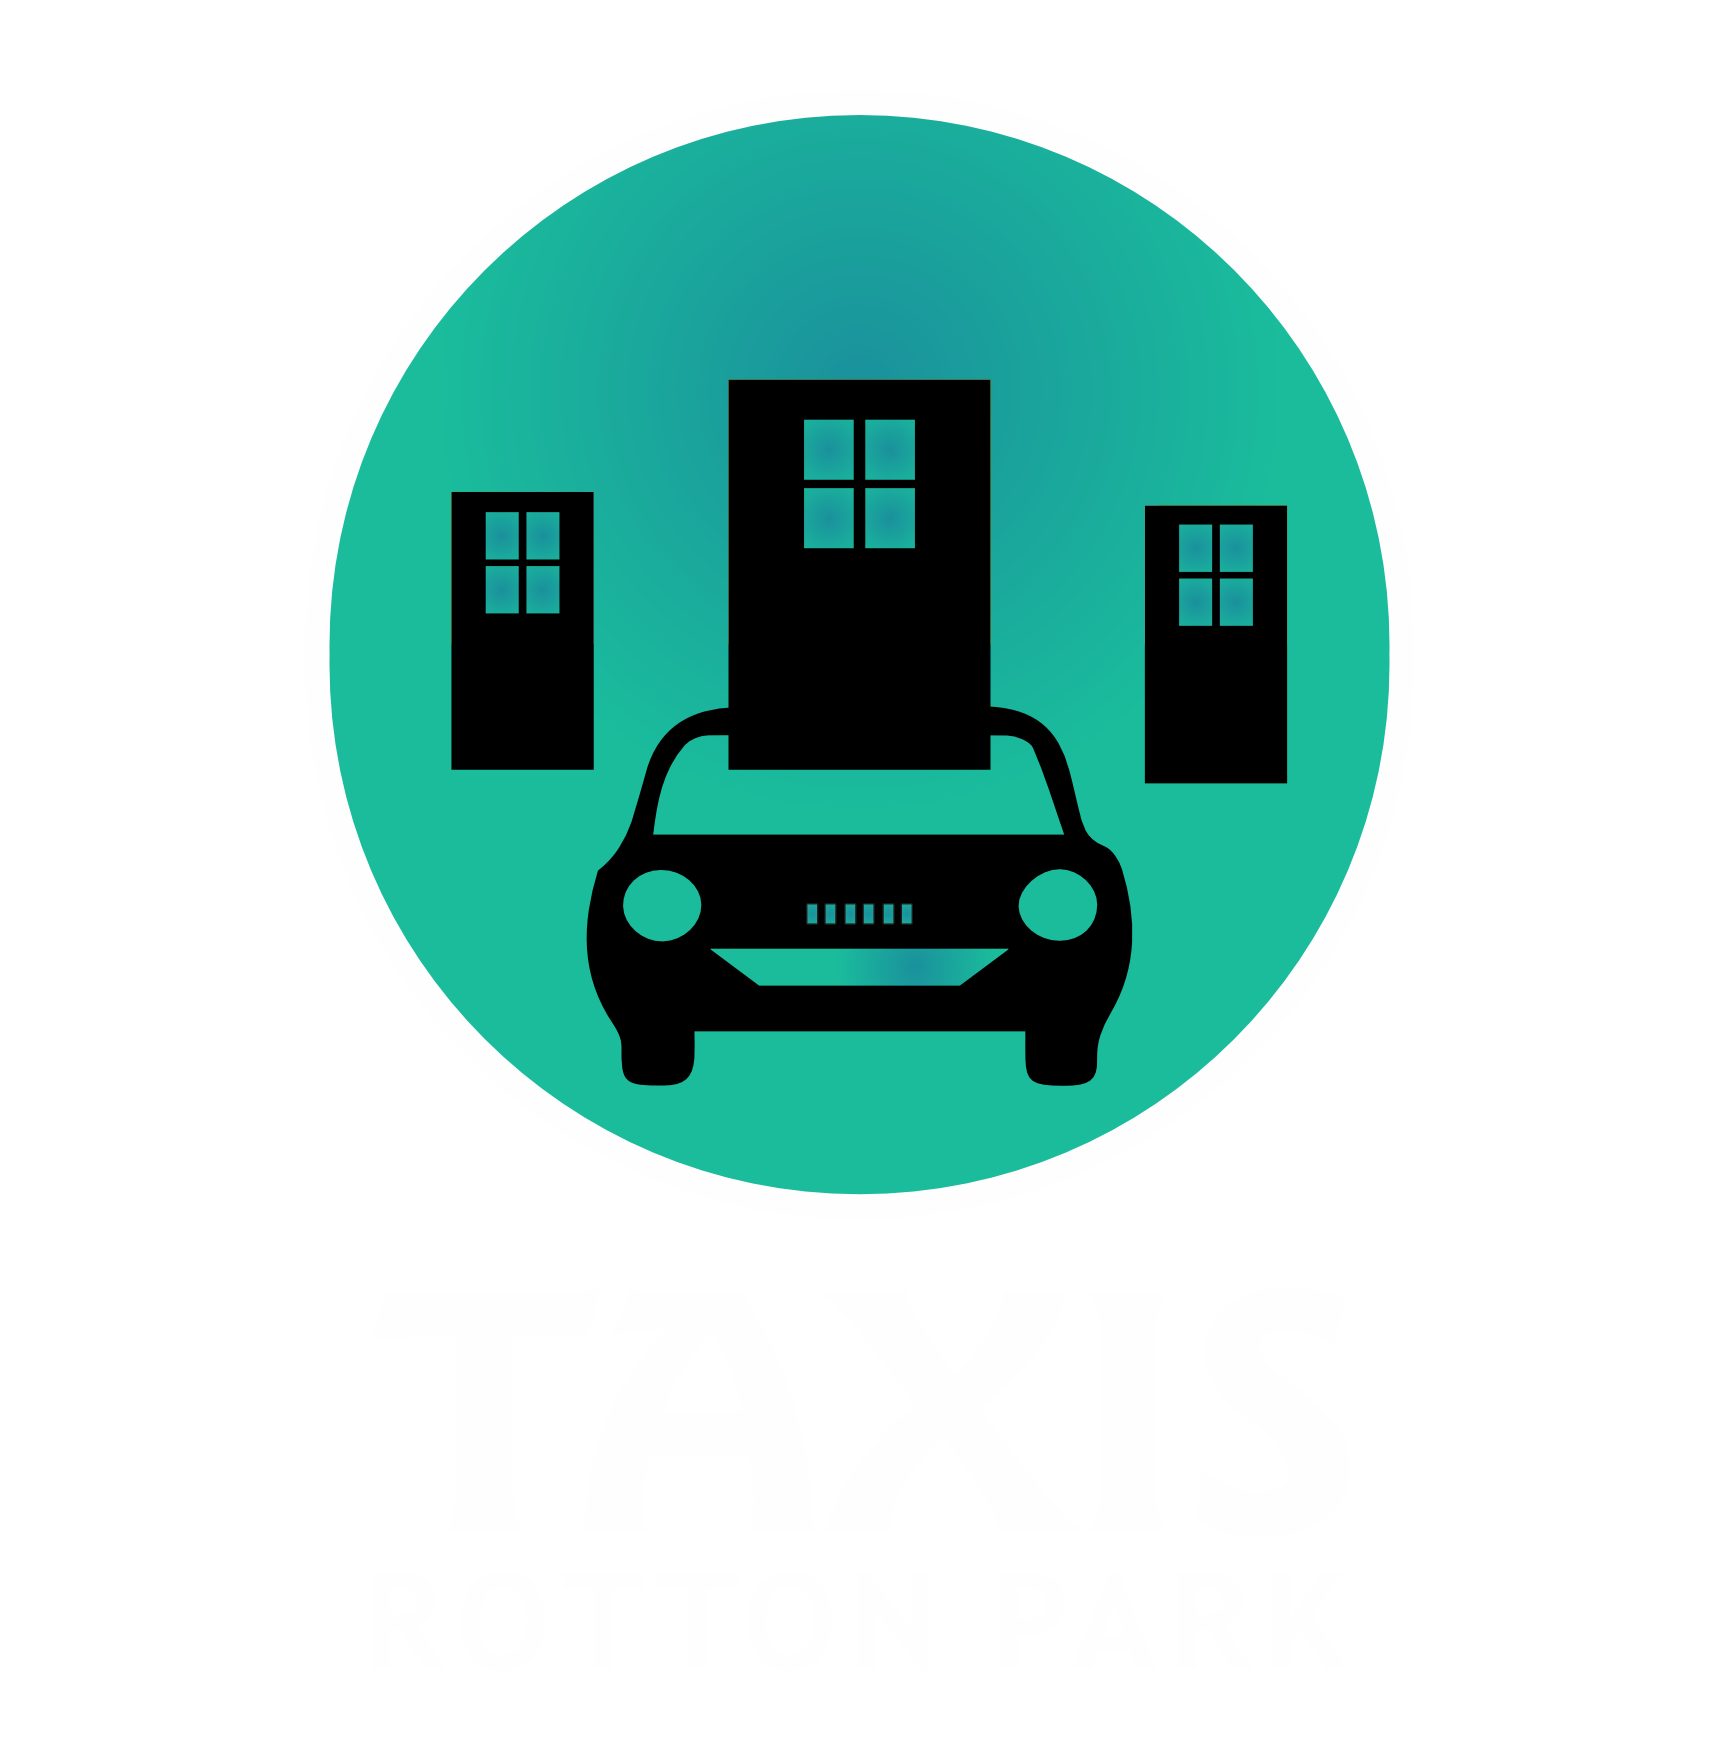 Rotton Park Taxis